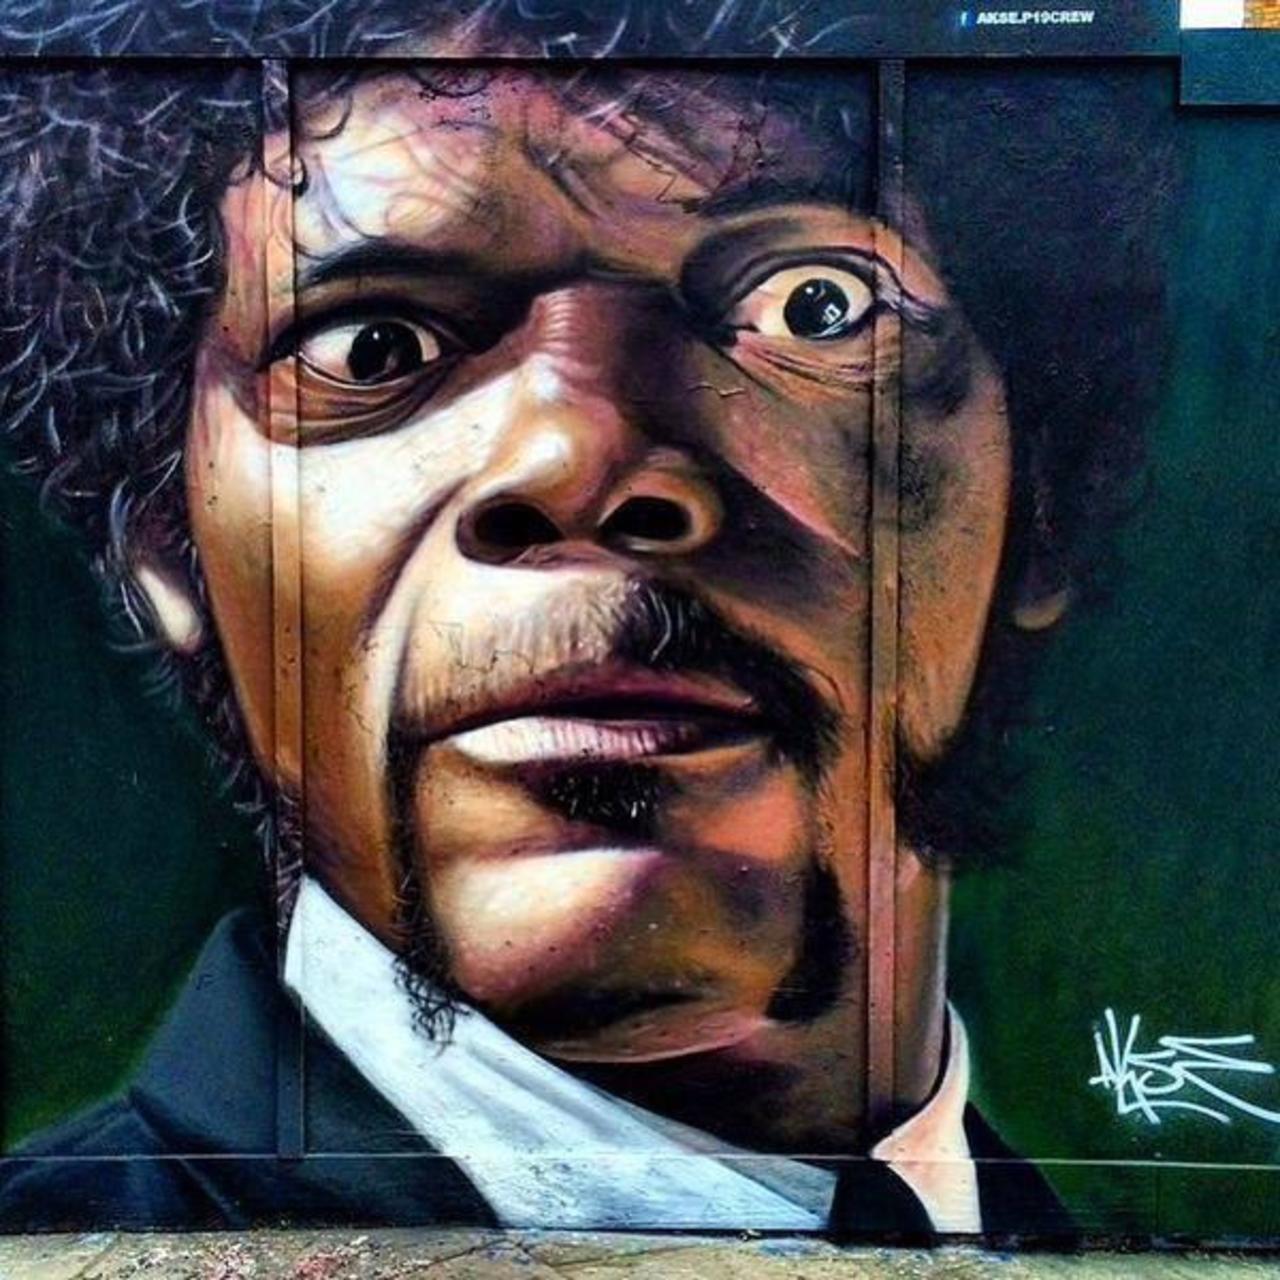 RT @AlexFromLIA: #Art #StreetArt #Graffiti #UrbanArt by #AKSE P19 ... http://t.co/QcGka67bbt